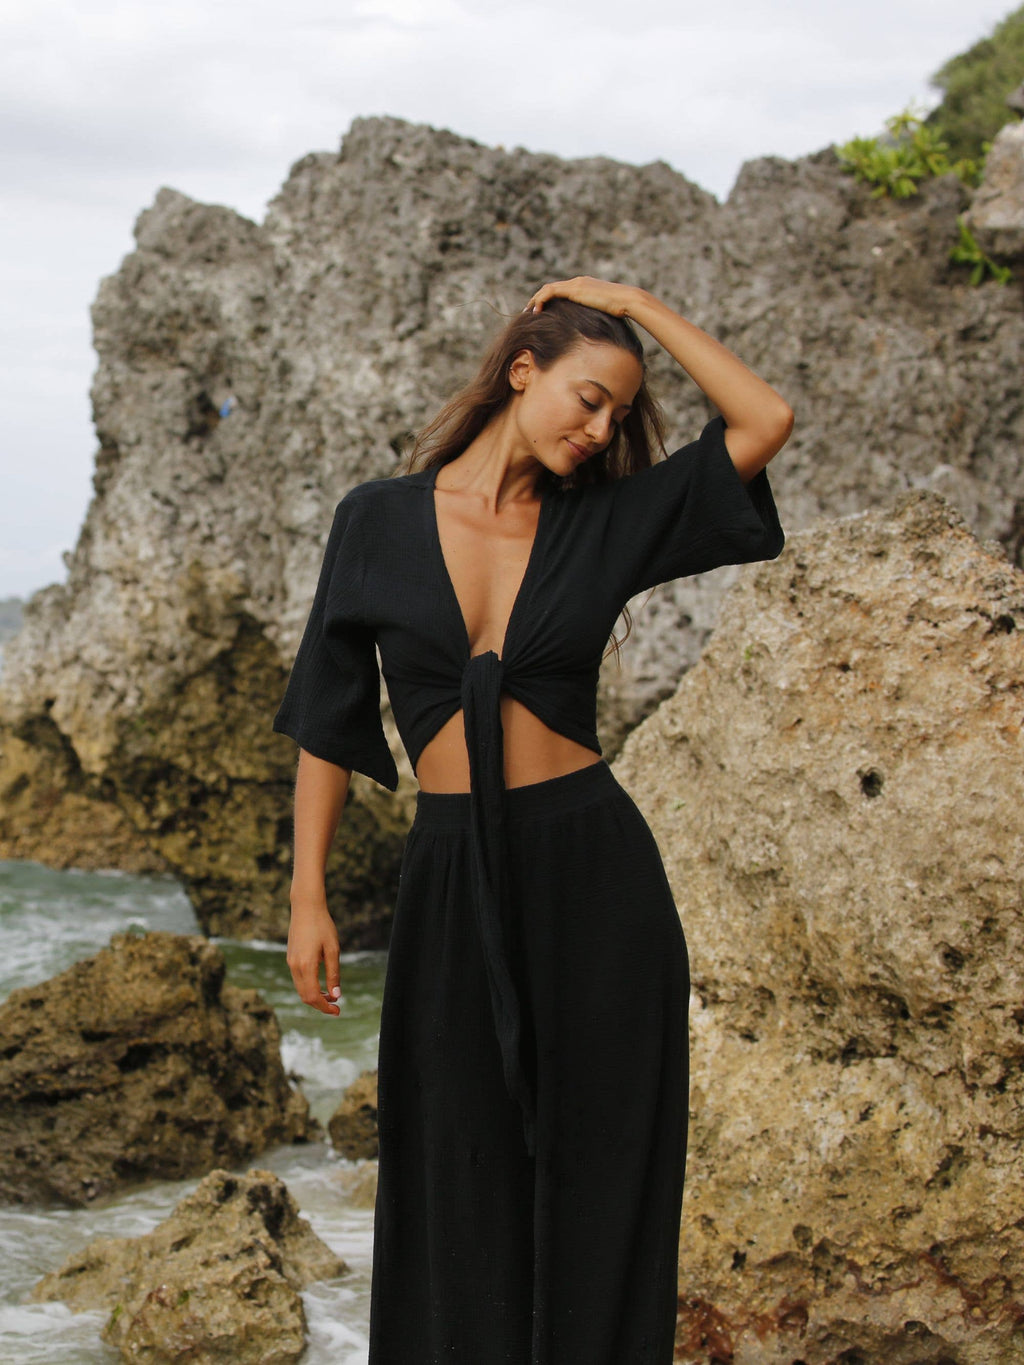 Bali Wrap Top - Black: One Size / Black The Handloom